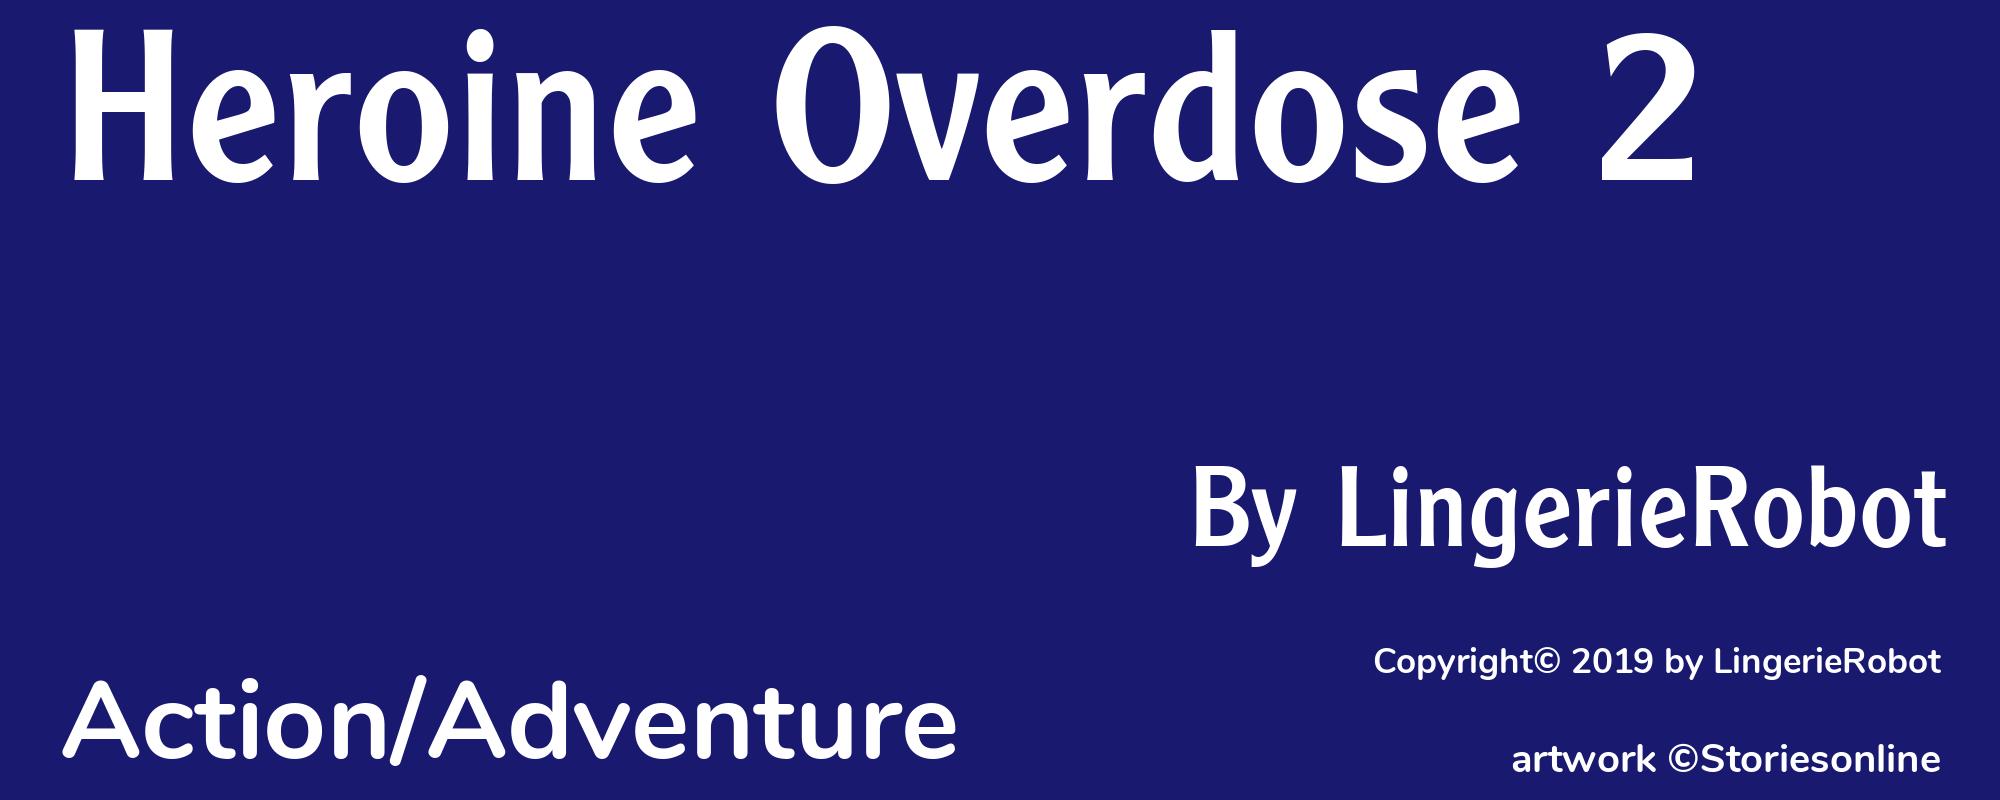 Heroine Overdose 2 - Cover